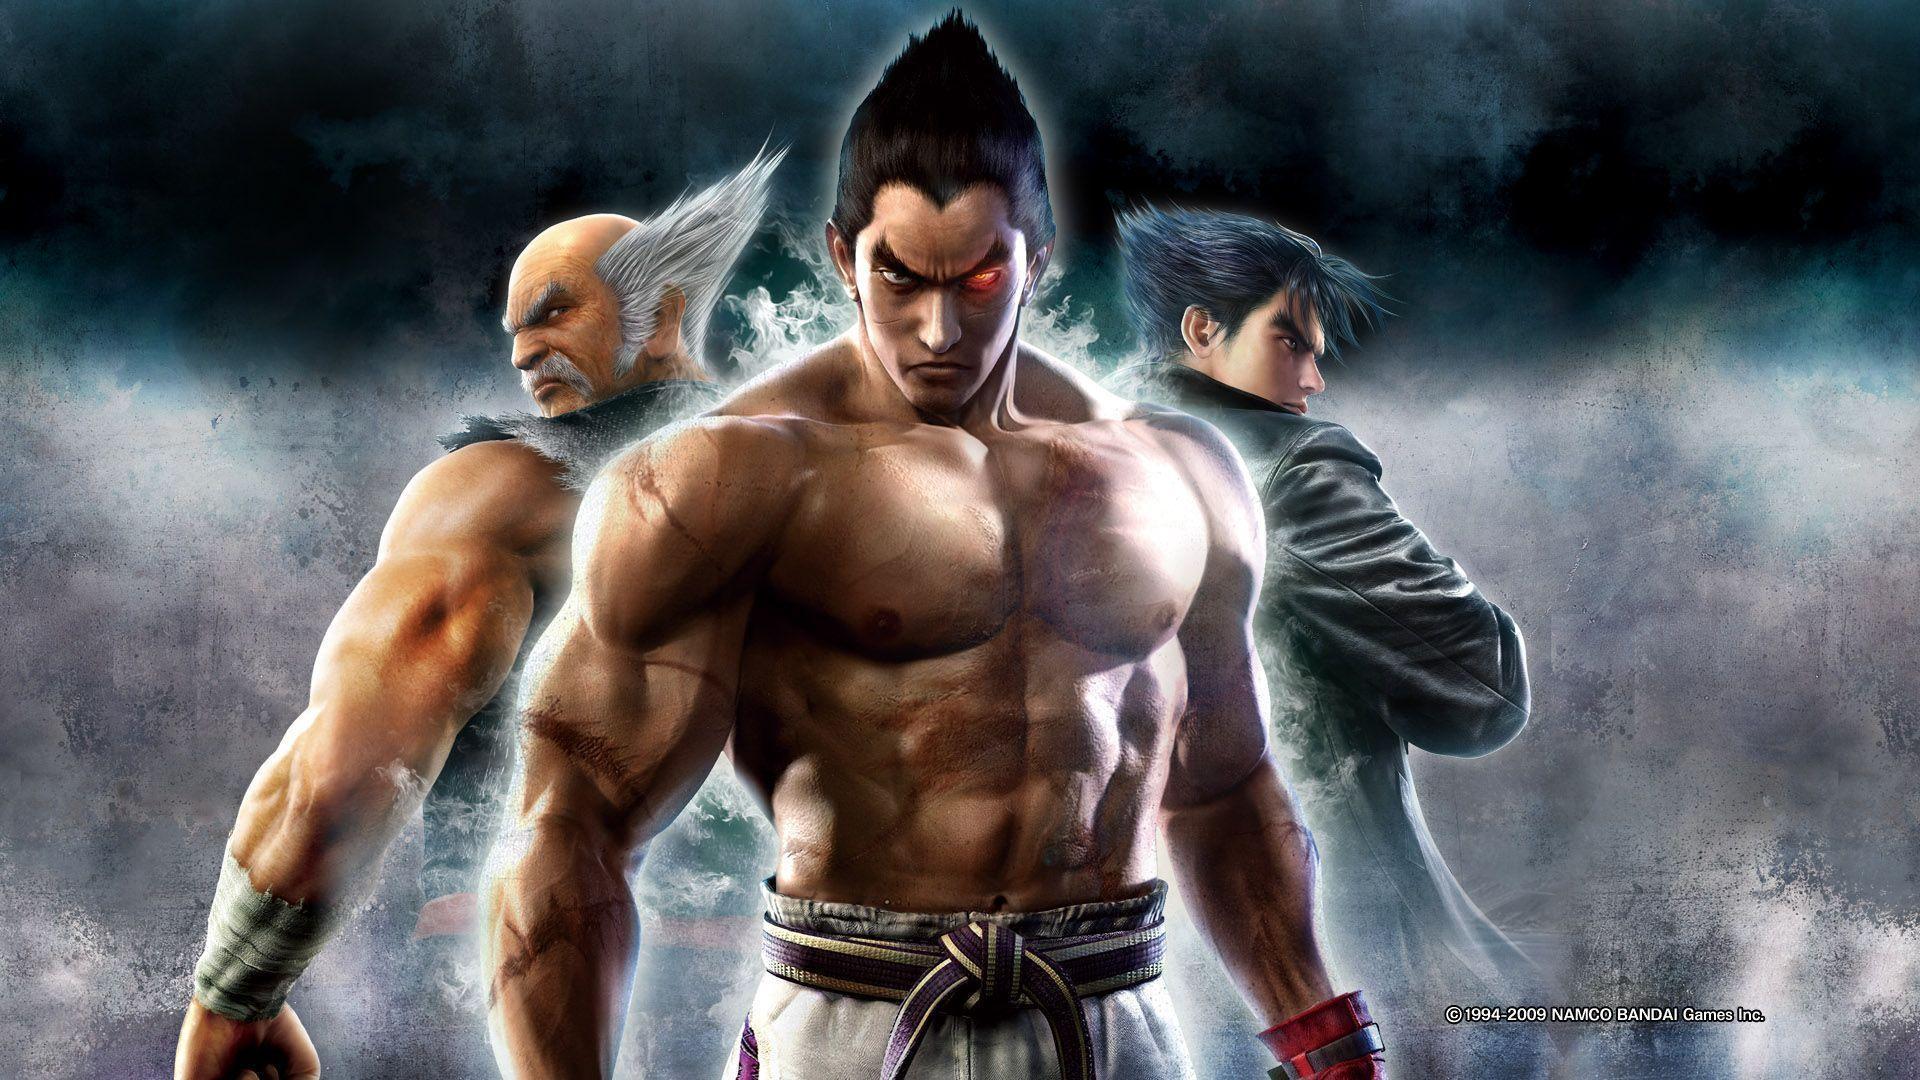 Tekken 7 Fated Retribution UltraWide 219 wallpapers or desktop backgrounds